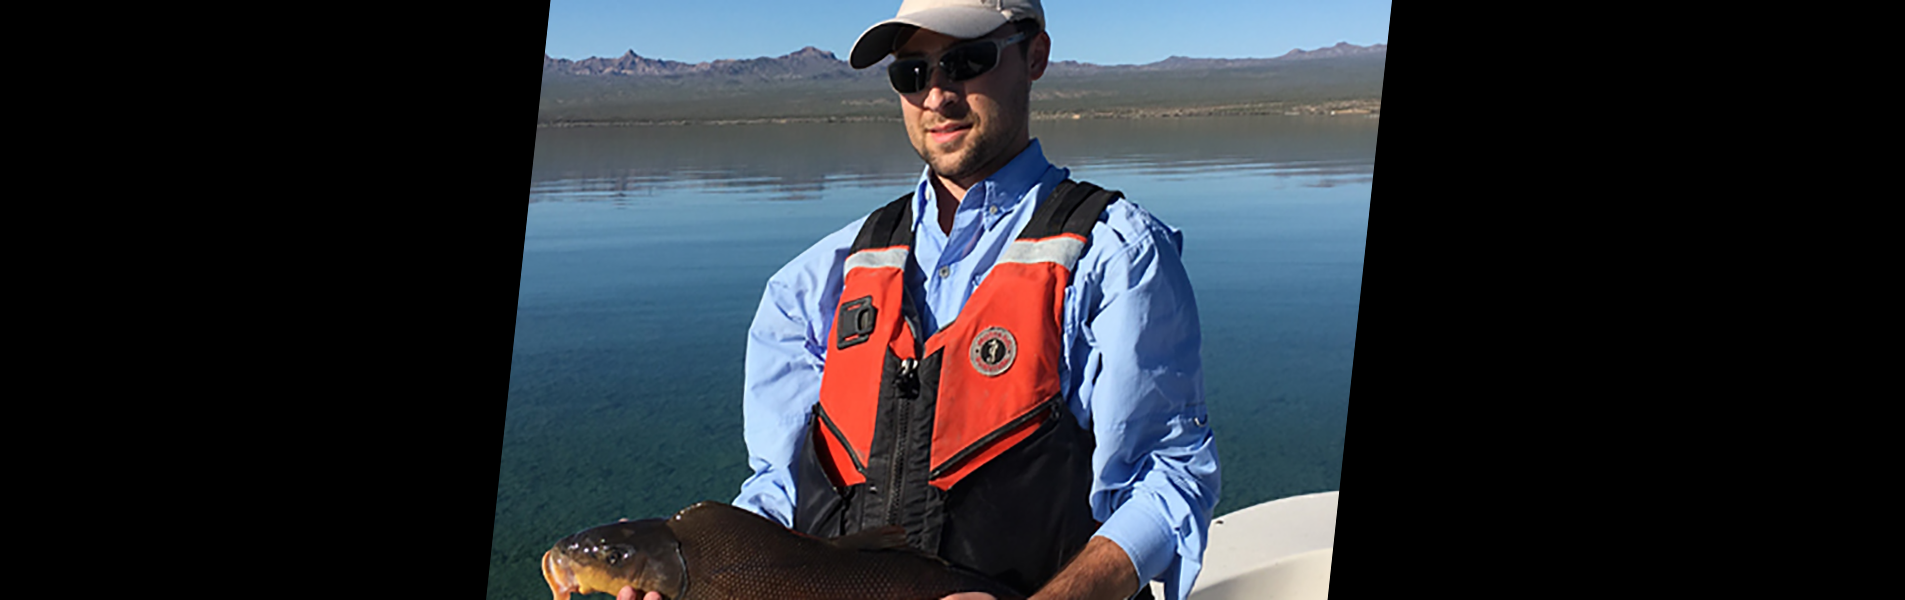 Wes Goldsmith, FNR alumni, on boat holding a fish